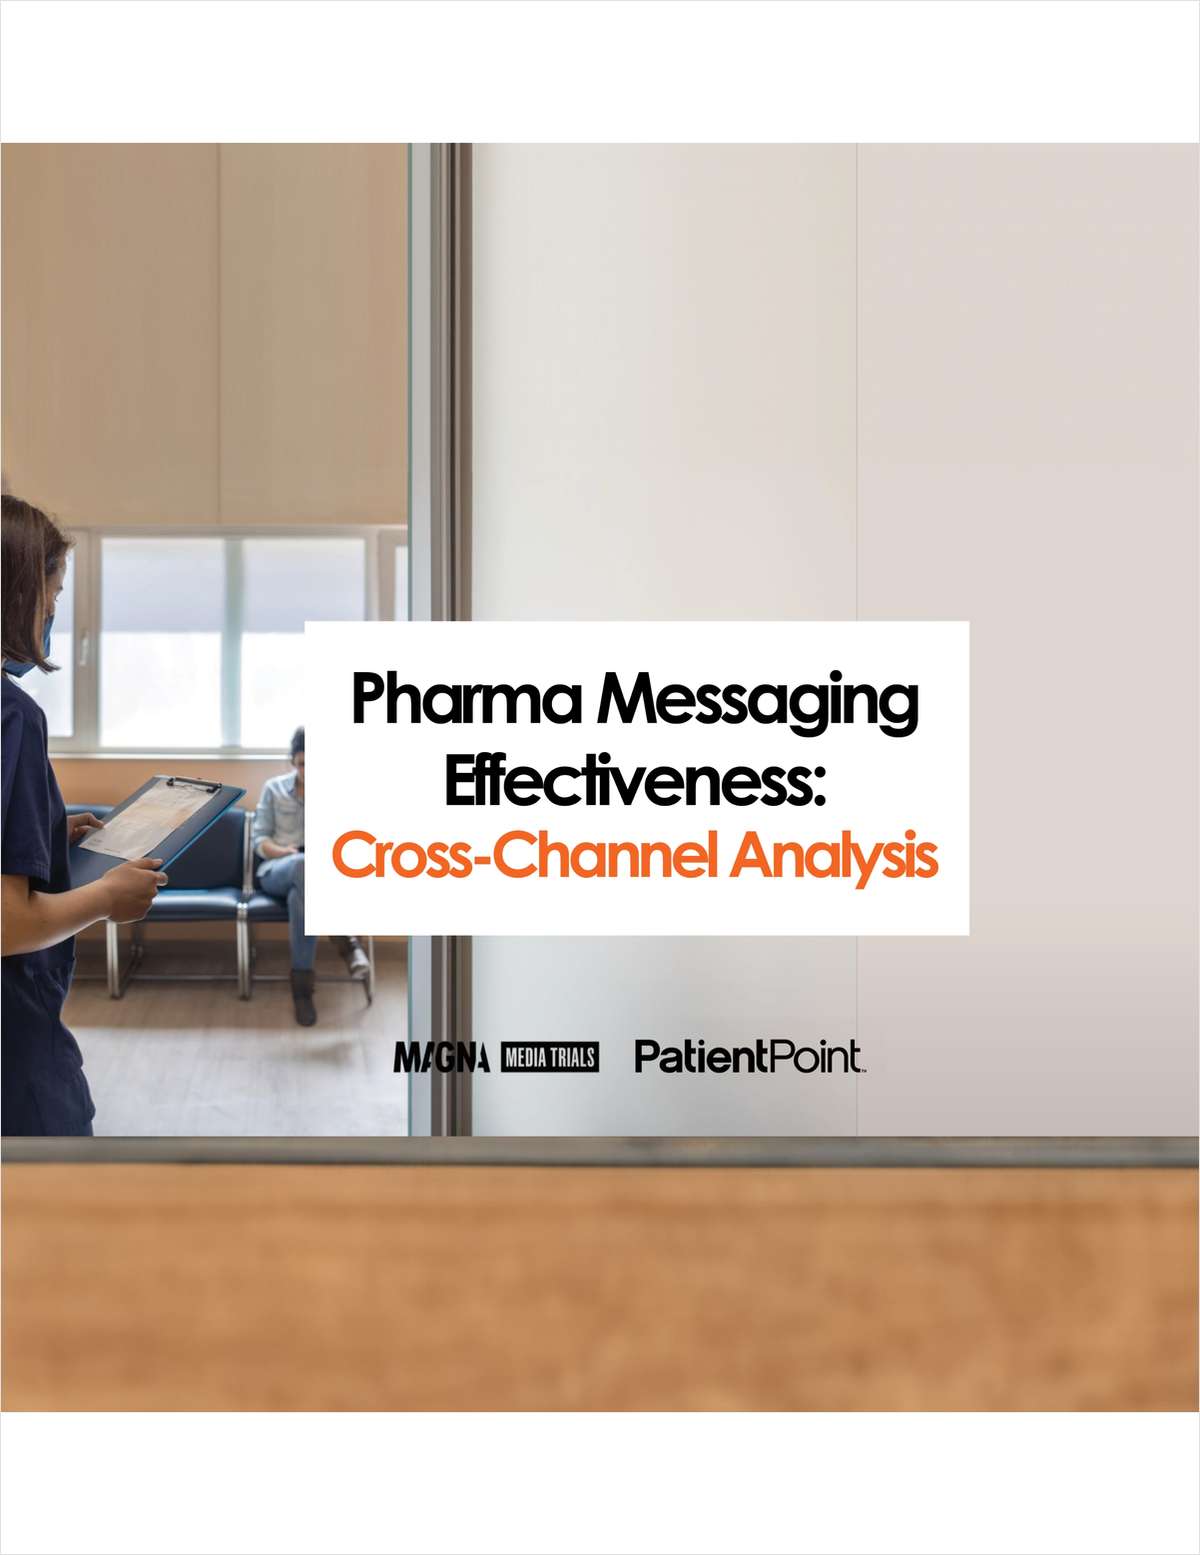 Pharma Messaging Effectiveness: Cross-Channel Analysis